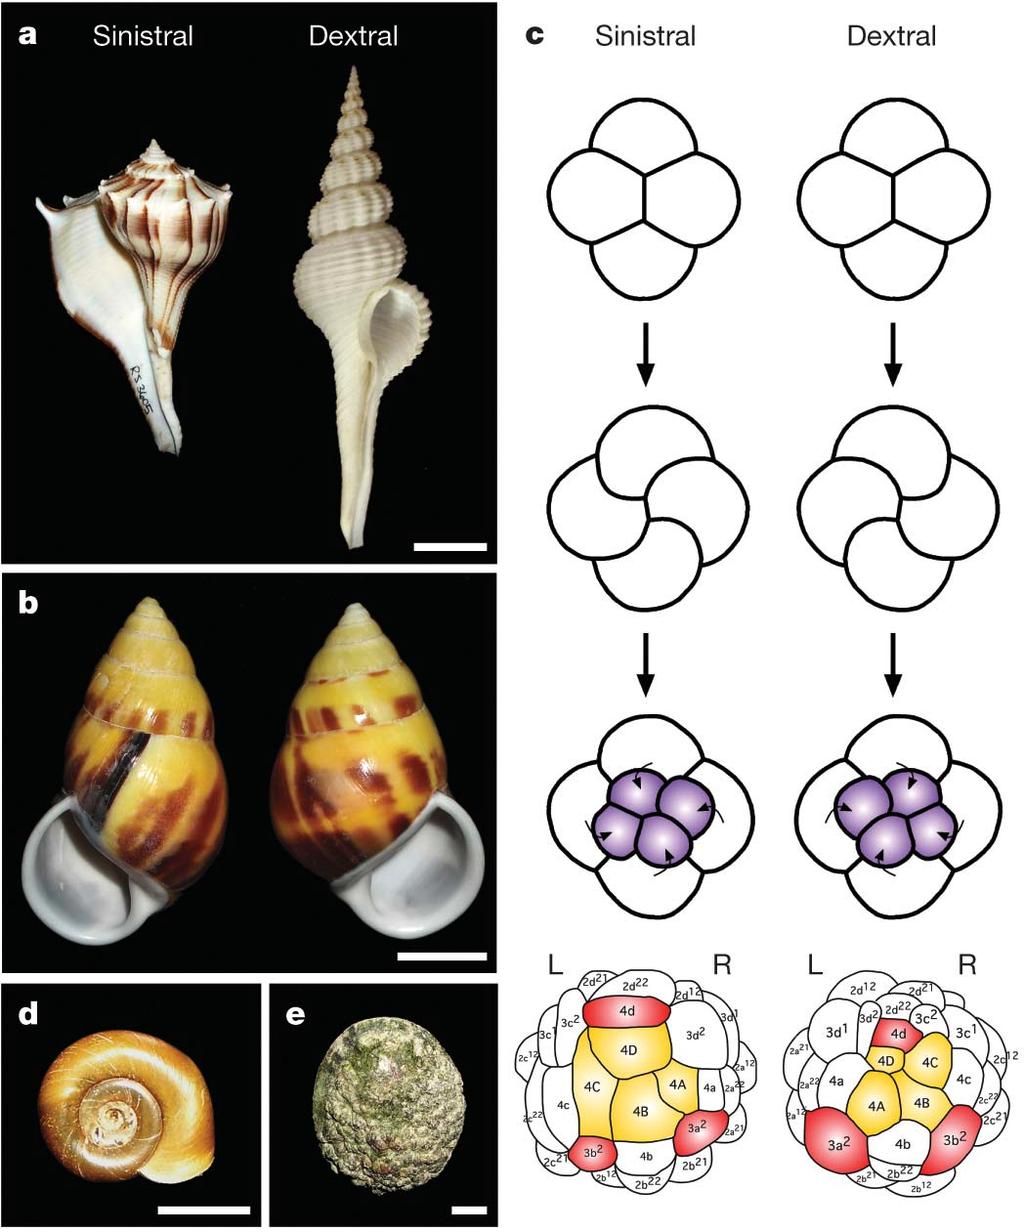 Vol 457 19 February 2009 doi:10.1038/nature07603 Nodal signalling is involved in left right asymmetry in snails Cristina Grande 1,2,3 & Nipam H.